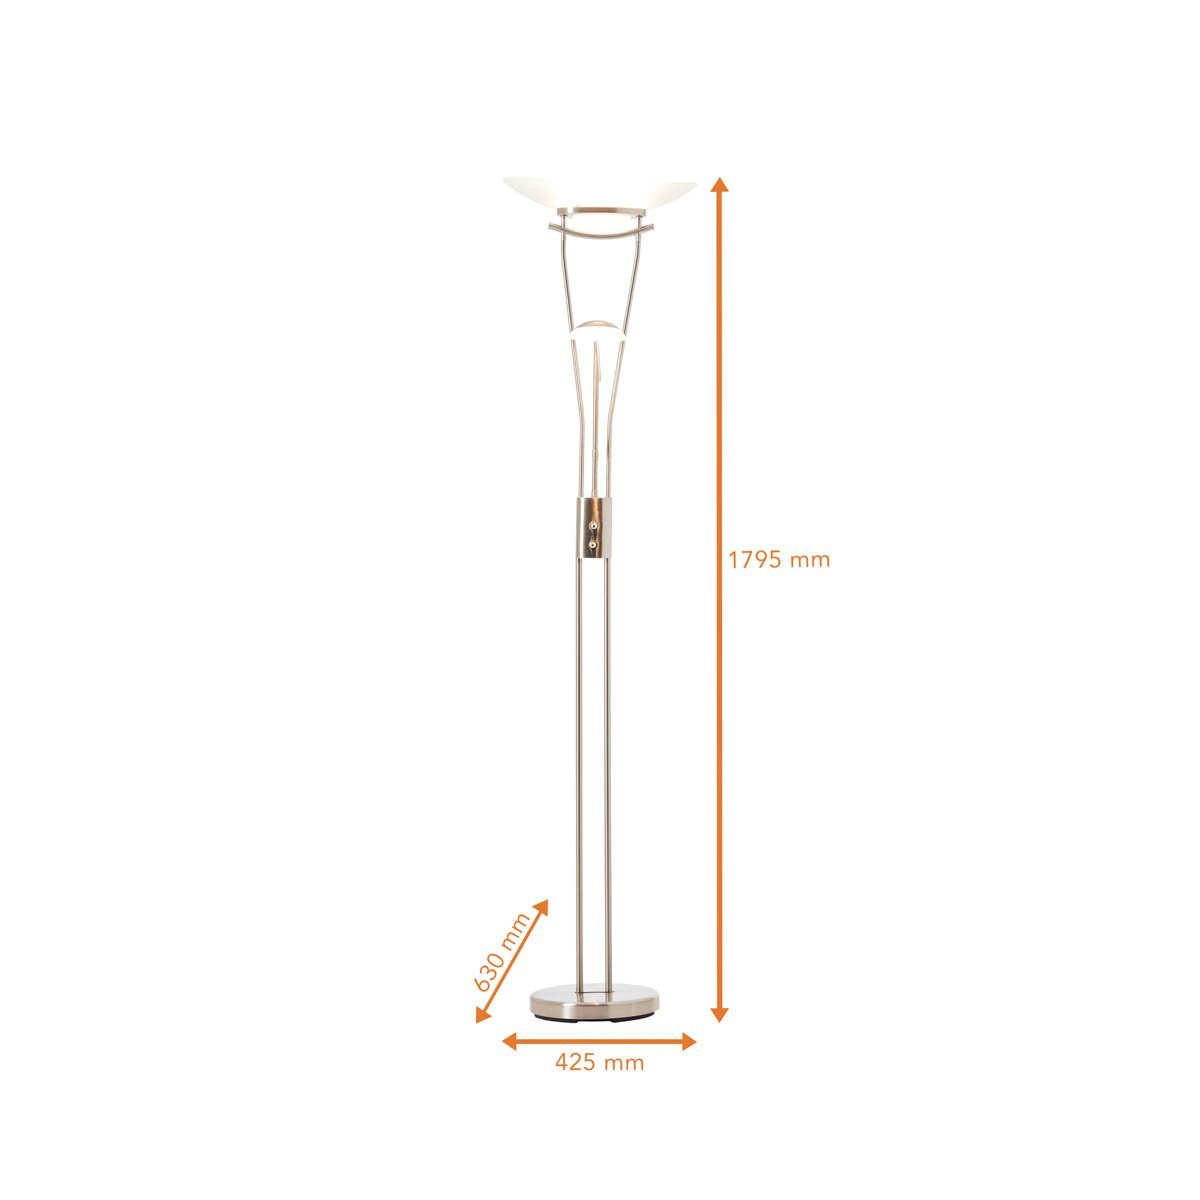 Lightbox Stehlampe, LED fest eisen/weiß integriert, 1,8m 2600lm, dimmbar, Warmweiß, flexibler Lesearm, Metall/Glas, Höhe